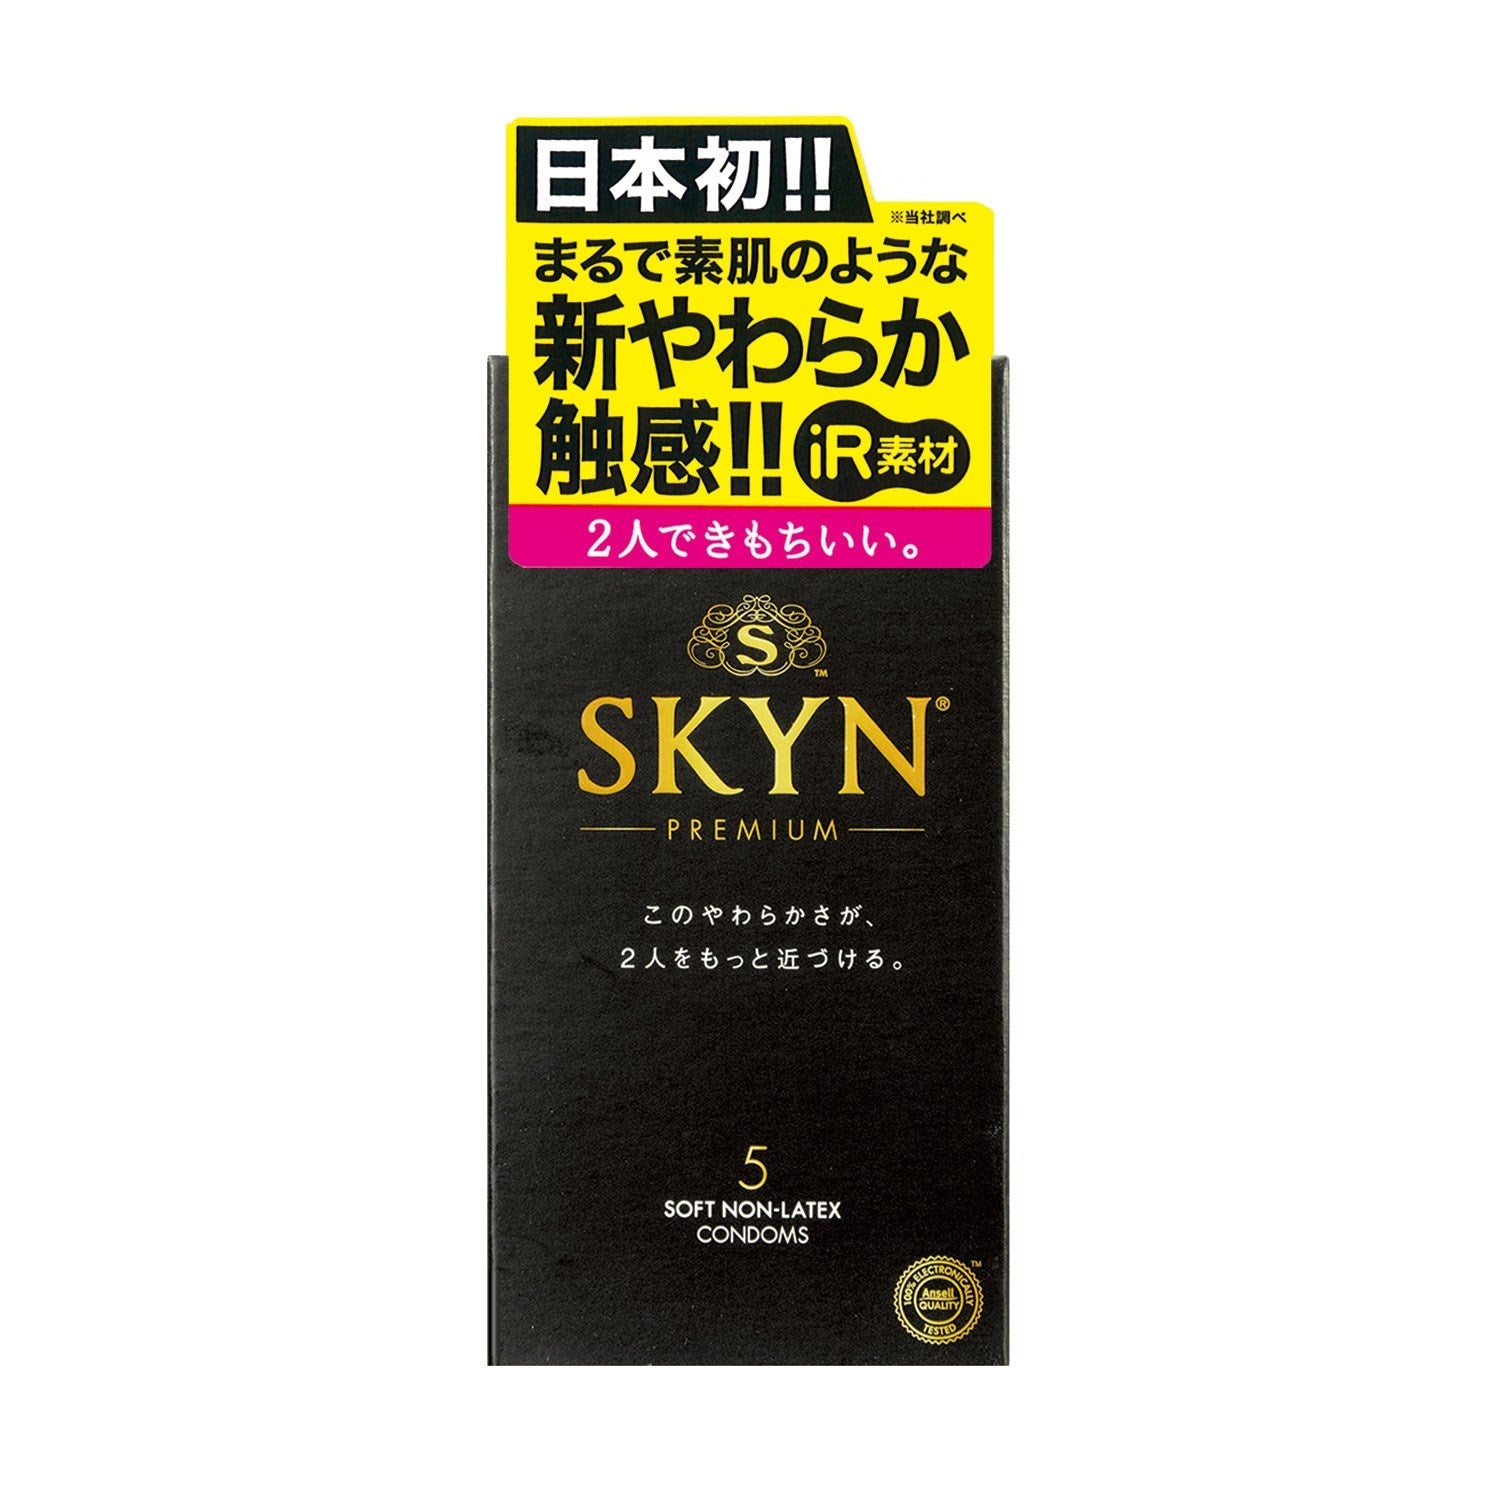 FUJI LATEX Premium 極膚水潤 日本版 iR 非乳膠 PI 安全套 安全套 5 片裝 購買